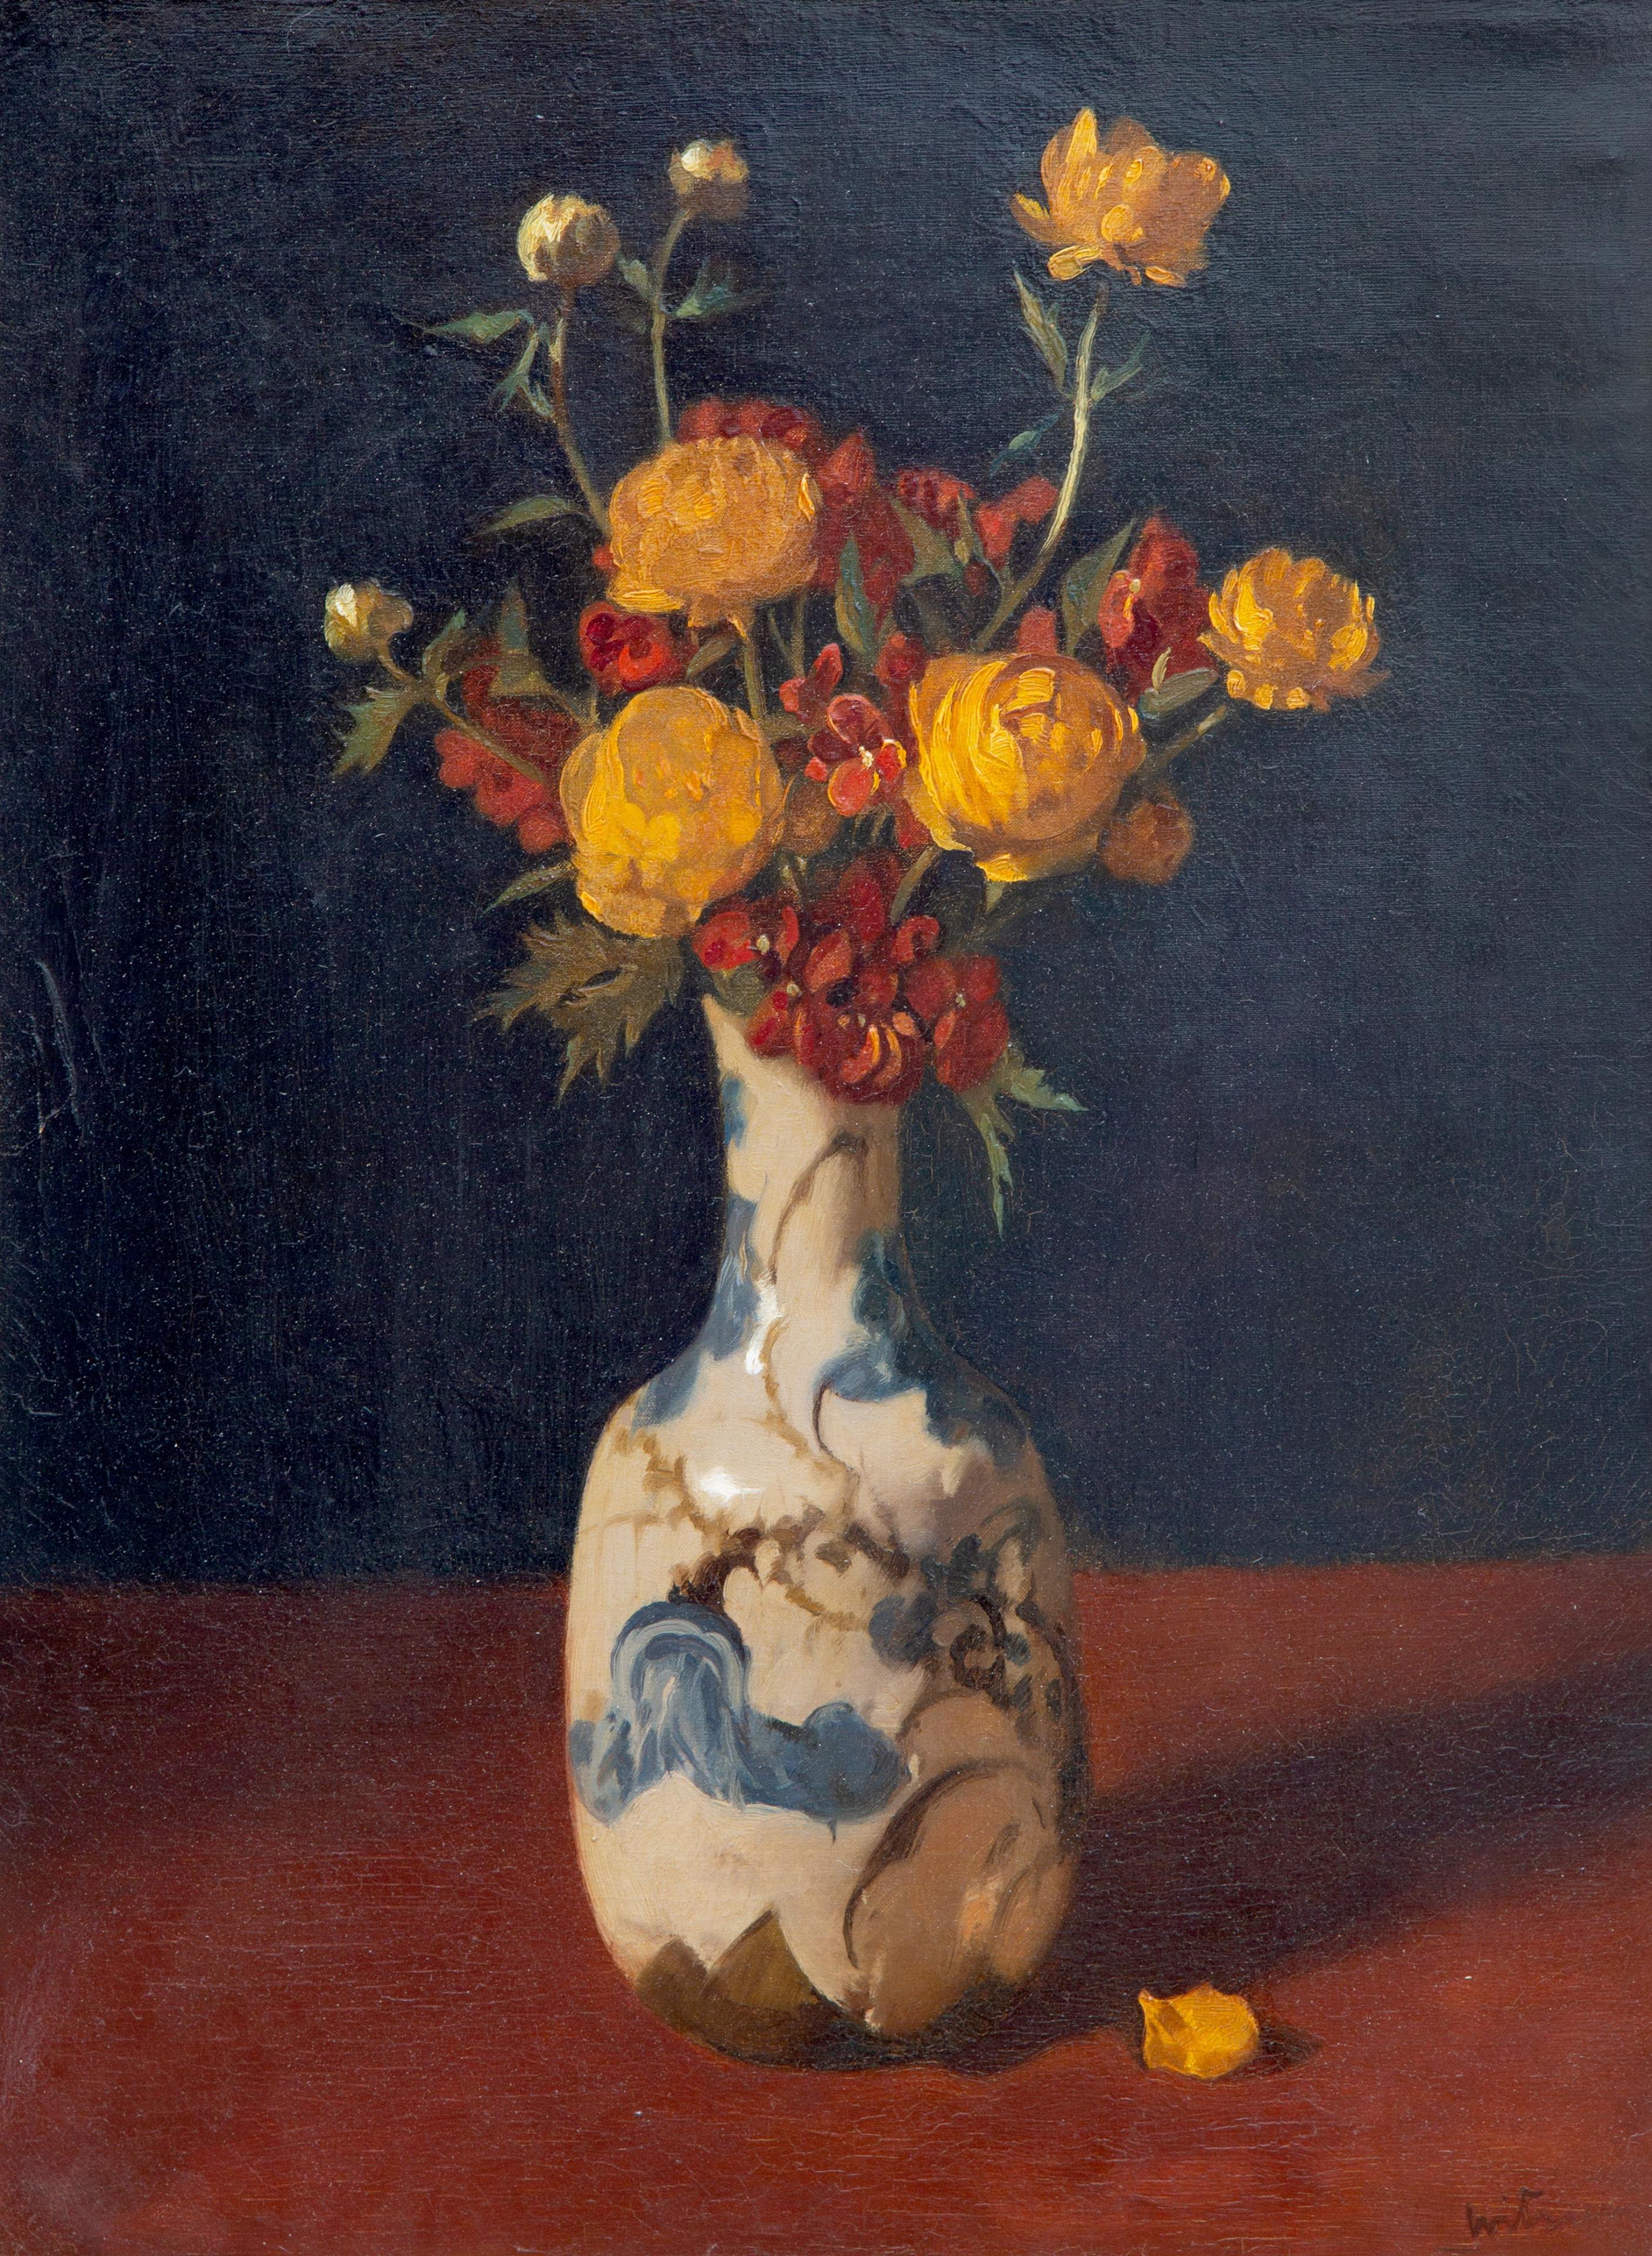 Orange ranunculi in a ceramic vase